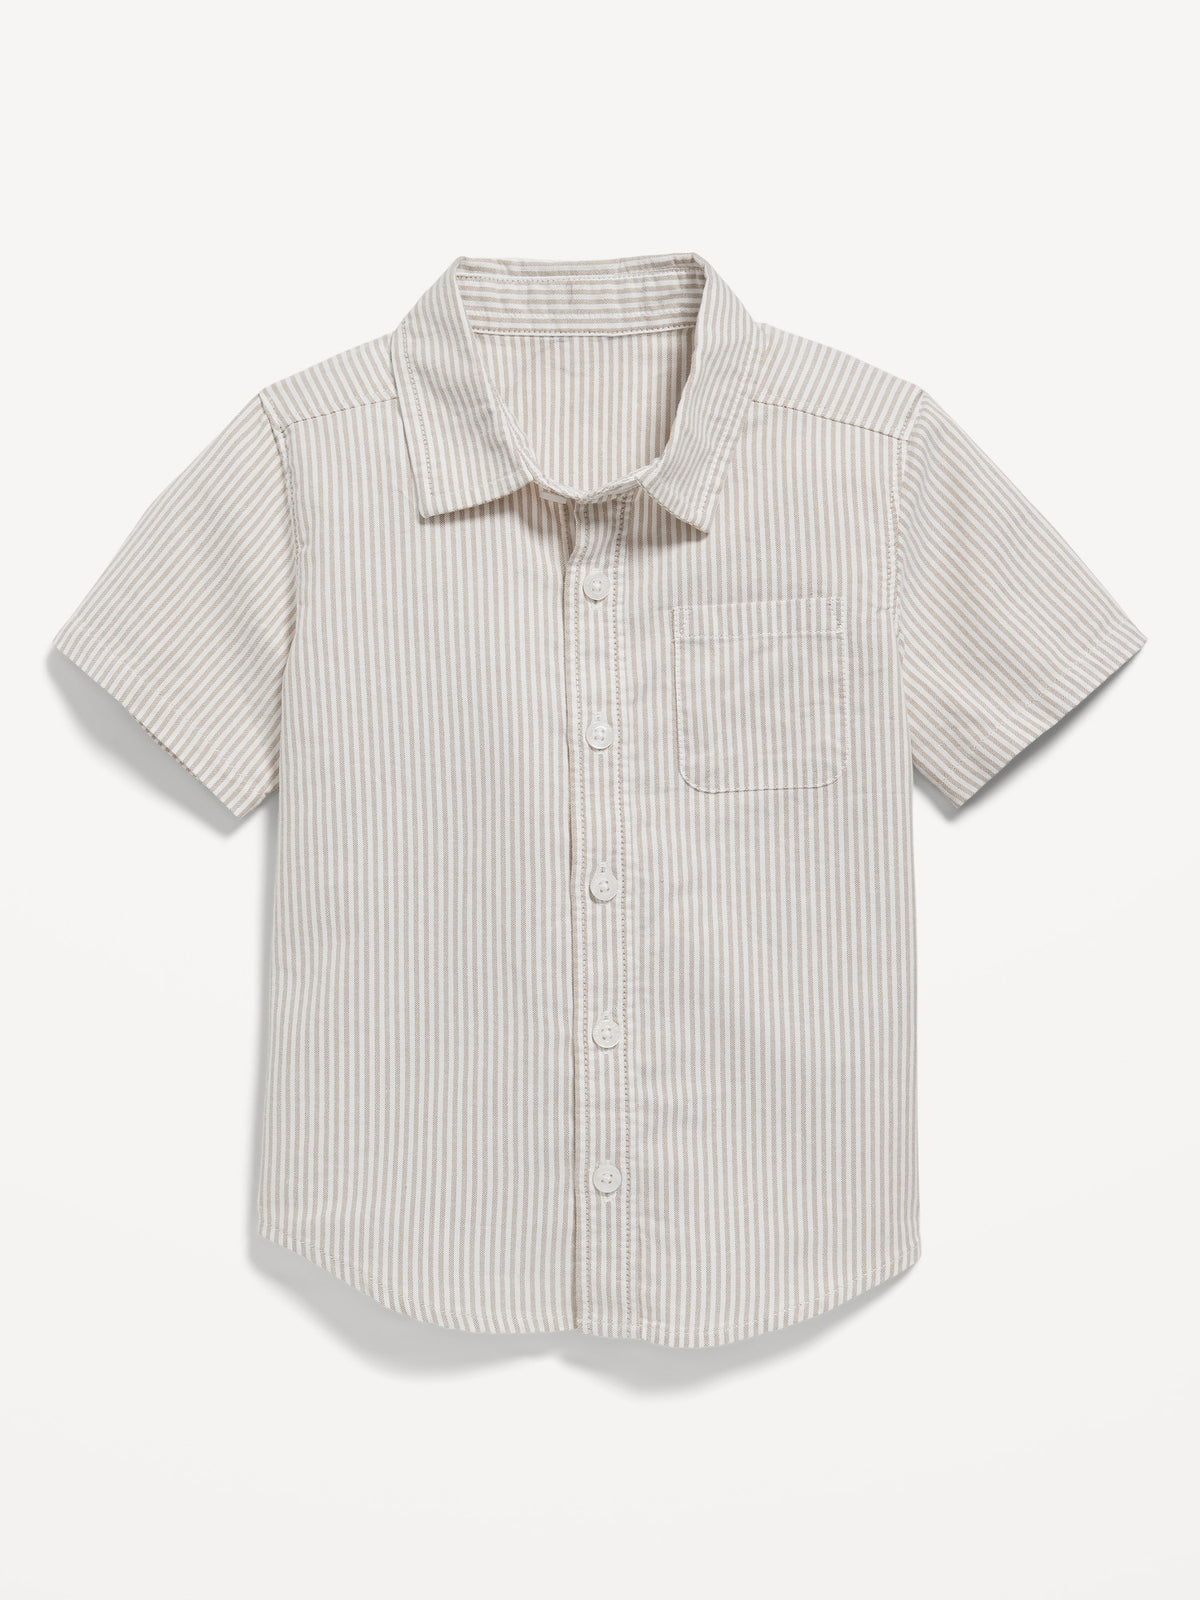 Striped Short-Sleeve Oxford Shirt for Toddler Boys